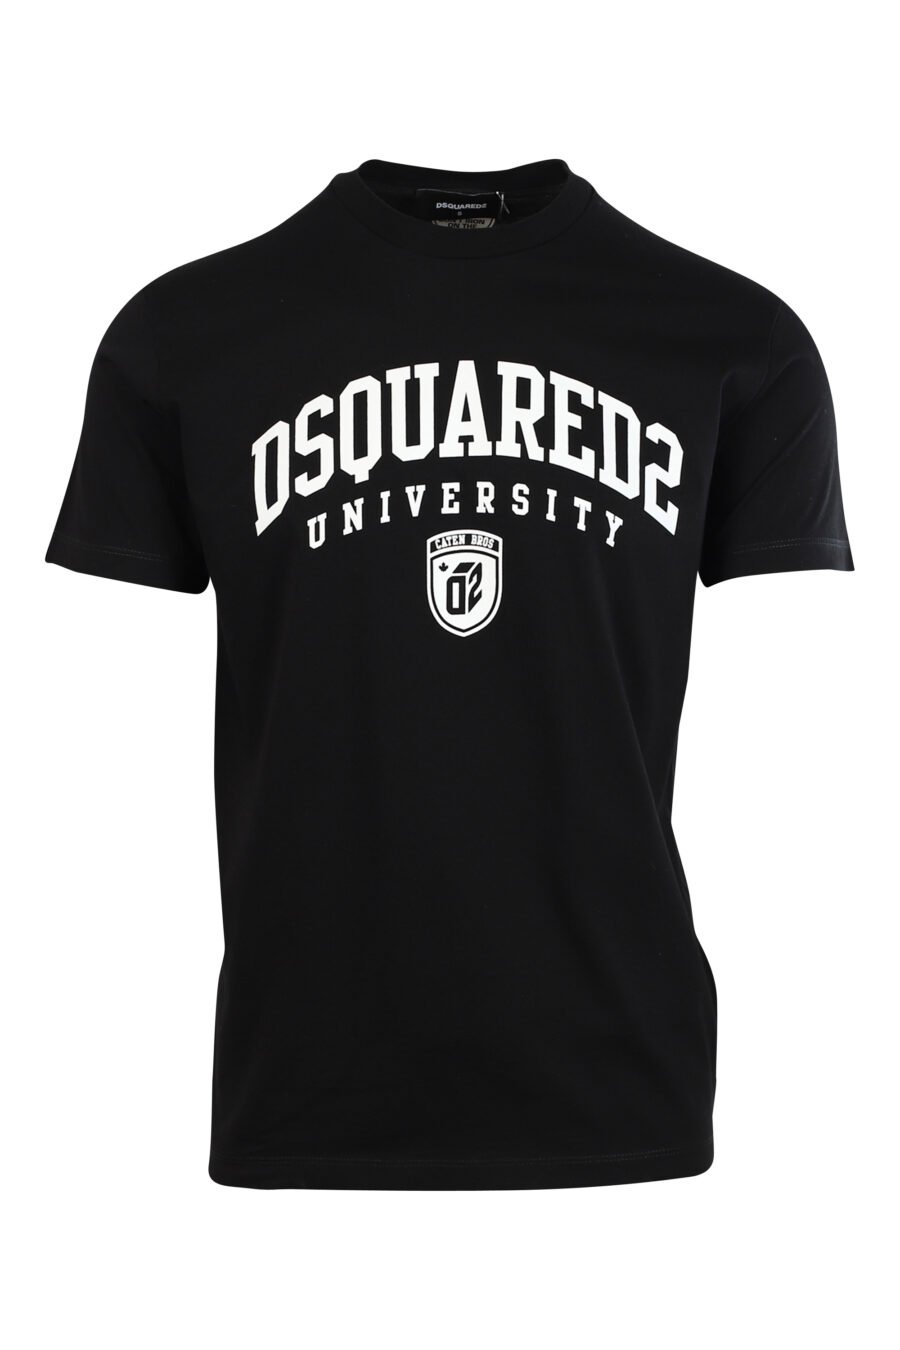 T-shirt noir avec maxilogo "université" blanc - 8052134945810